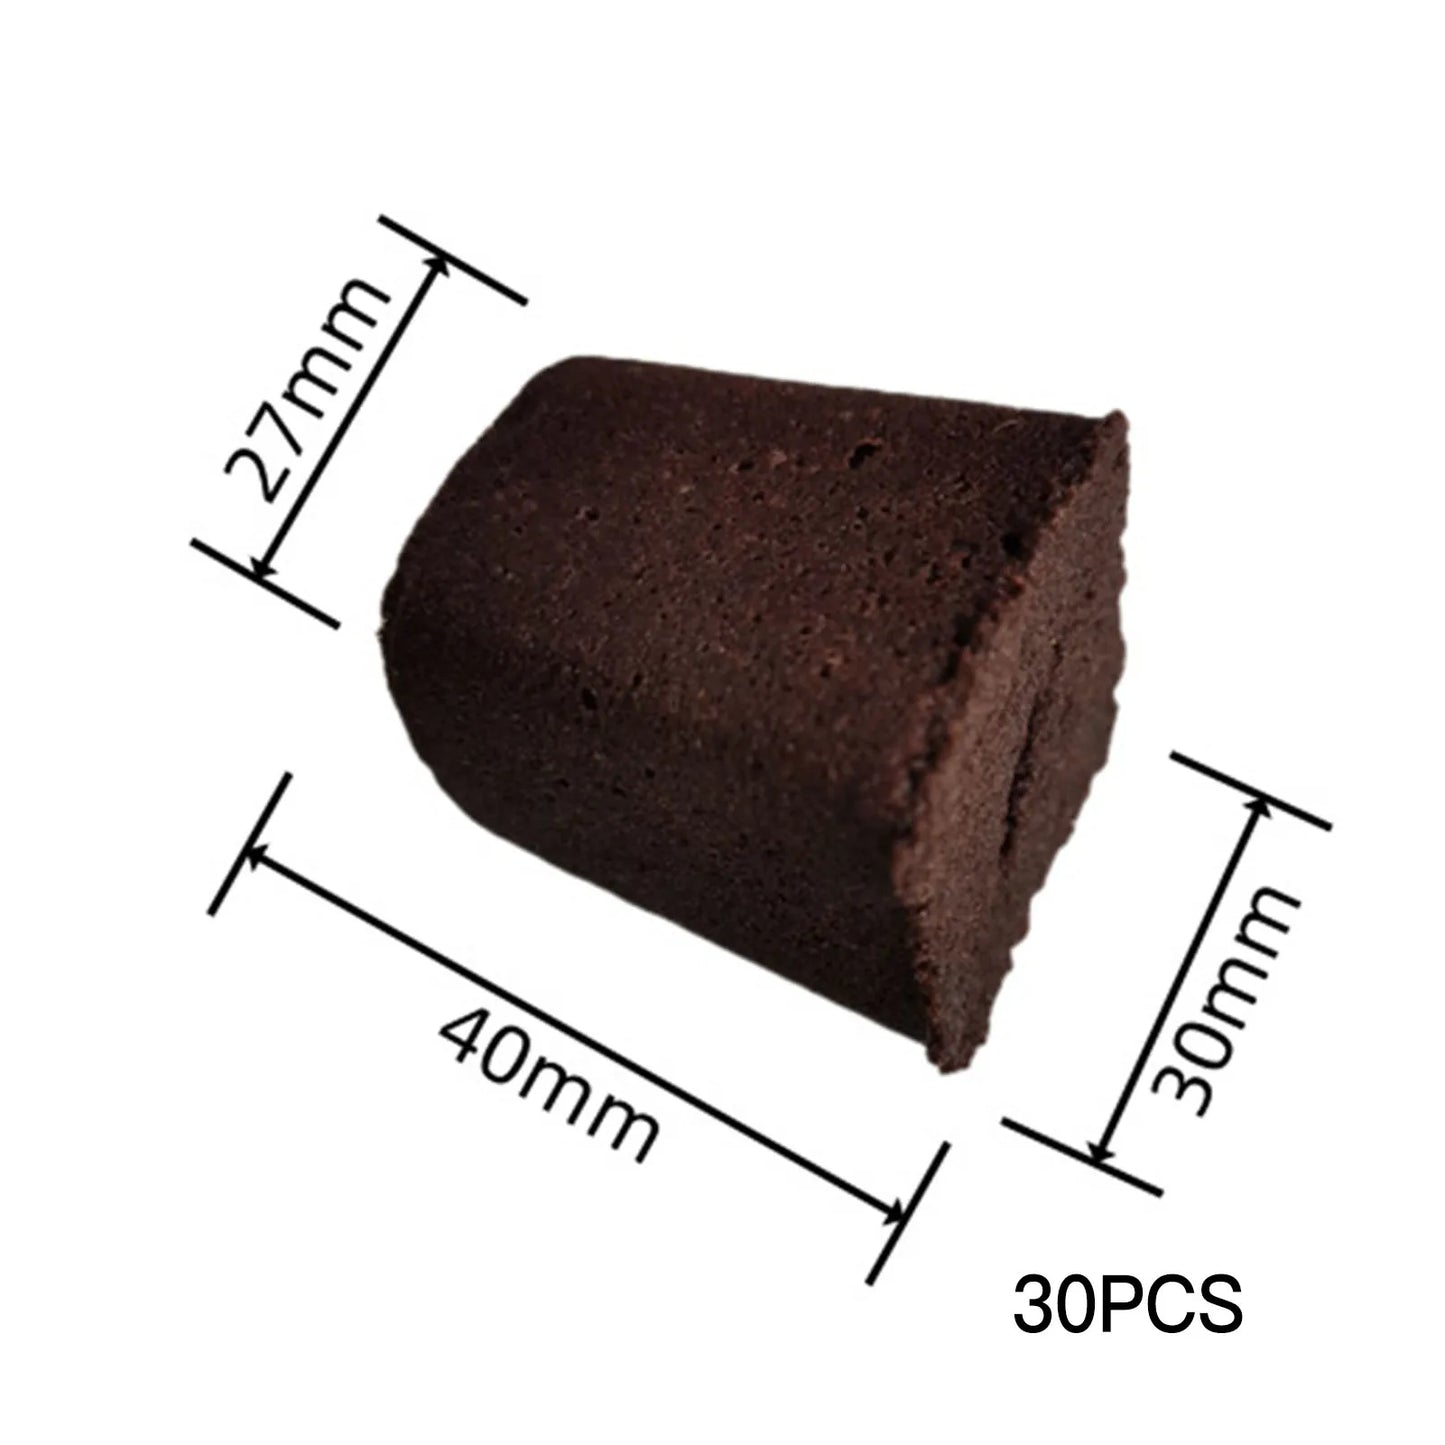 30pcs Seed Root Growth Sponges Seedling